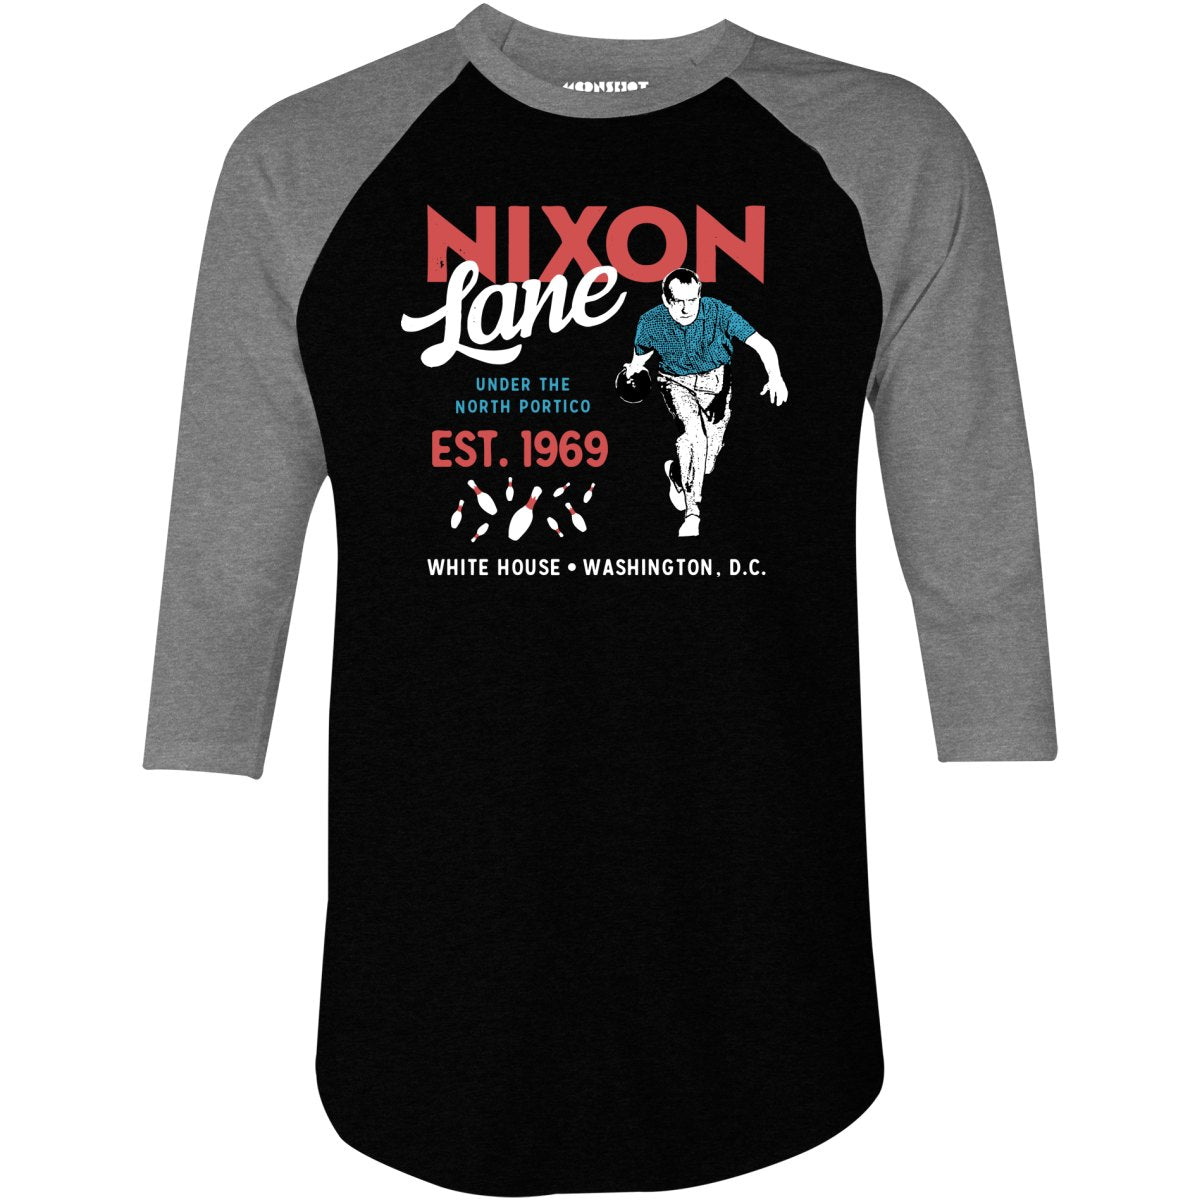 Nixon Lane - Washington D.C. - Vintage Bowling Alley - 3/4 Sleeve Raglan T-Shirt